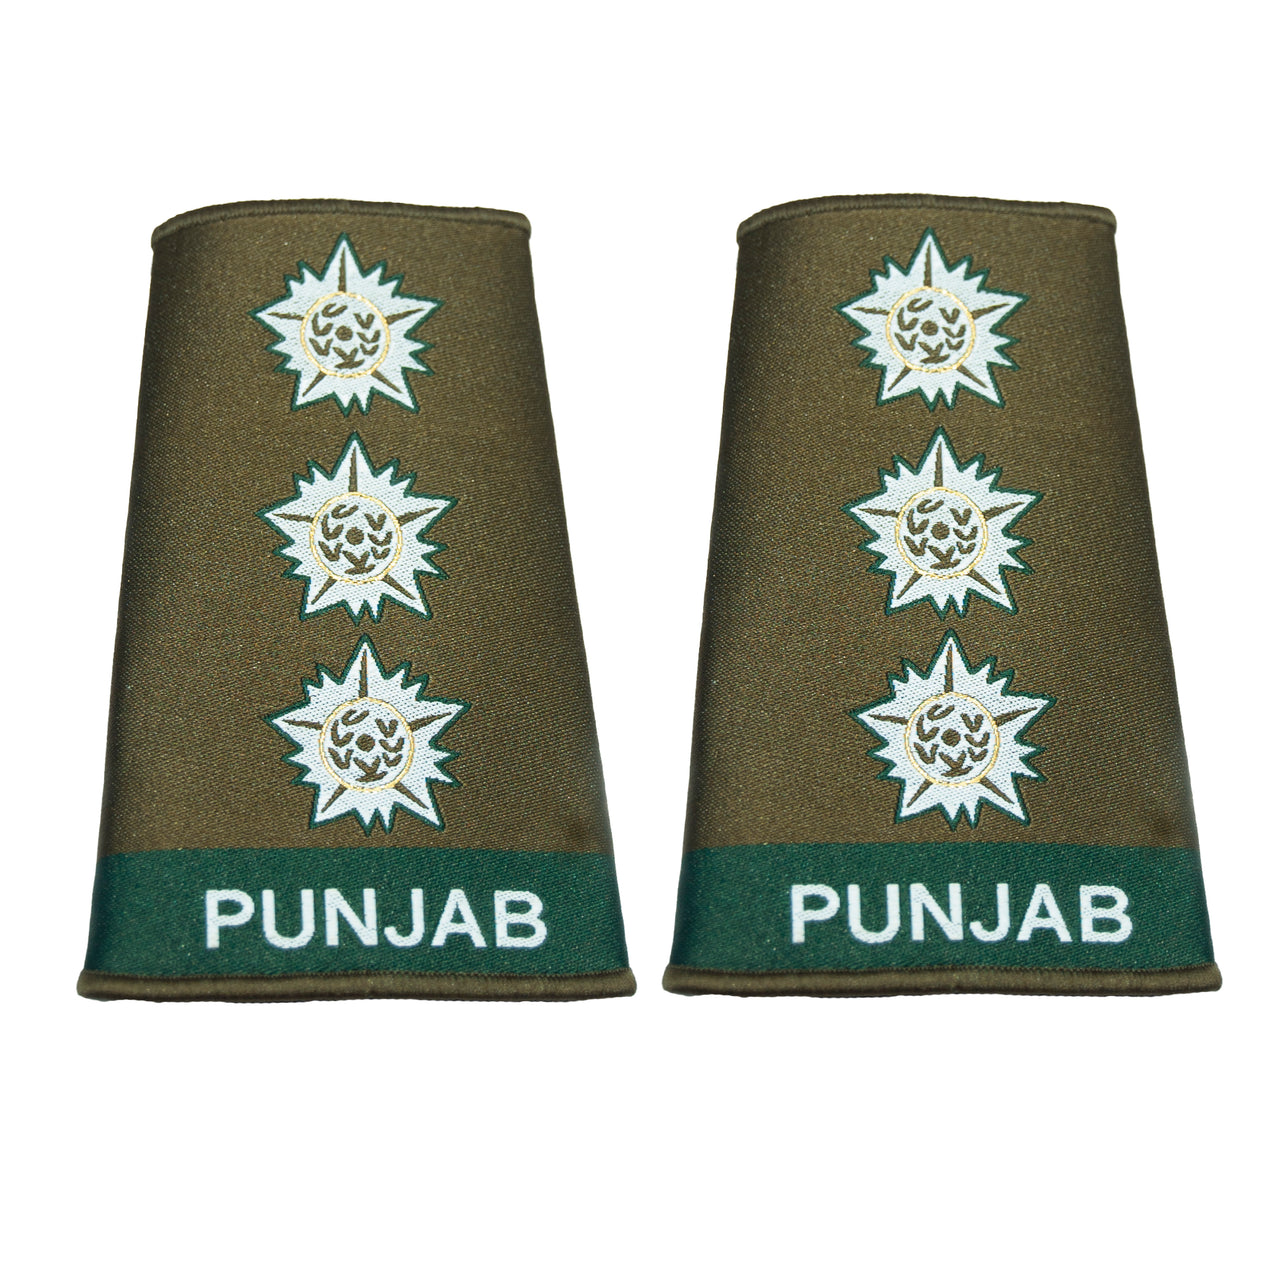 Indian Army Rank Epaulettes - Punjab Regiment